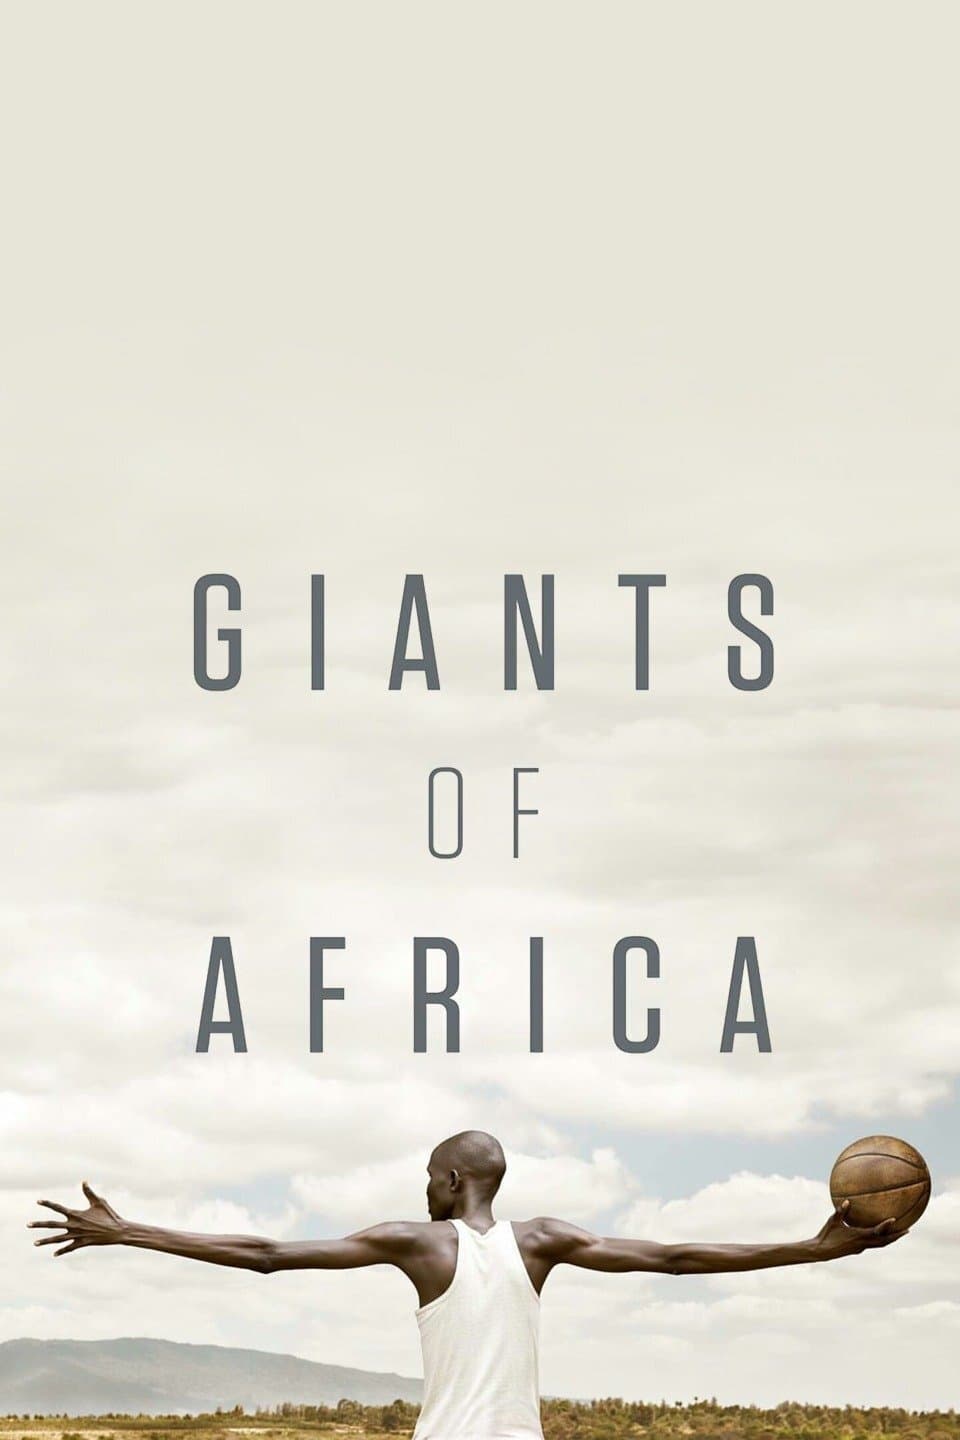 Giants of Africa